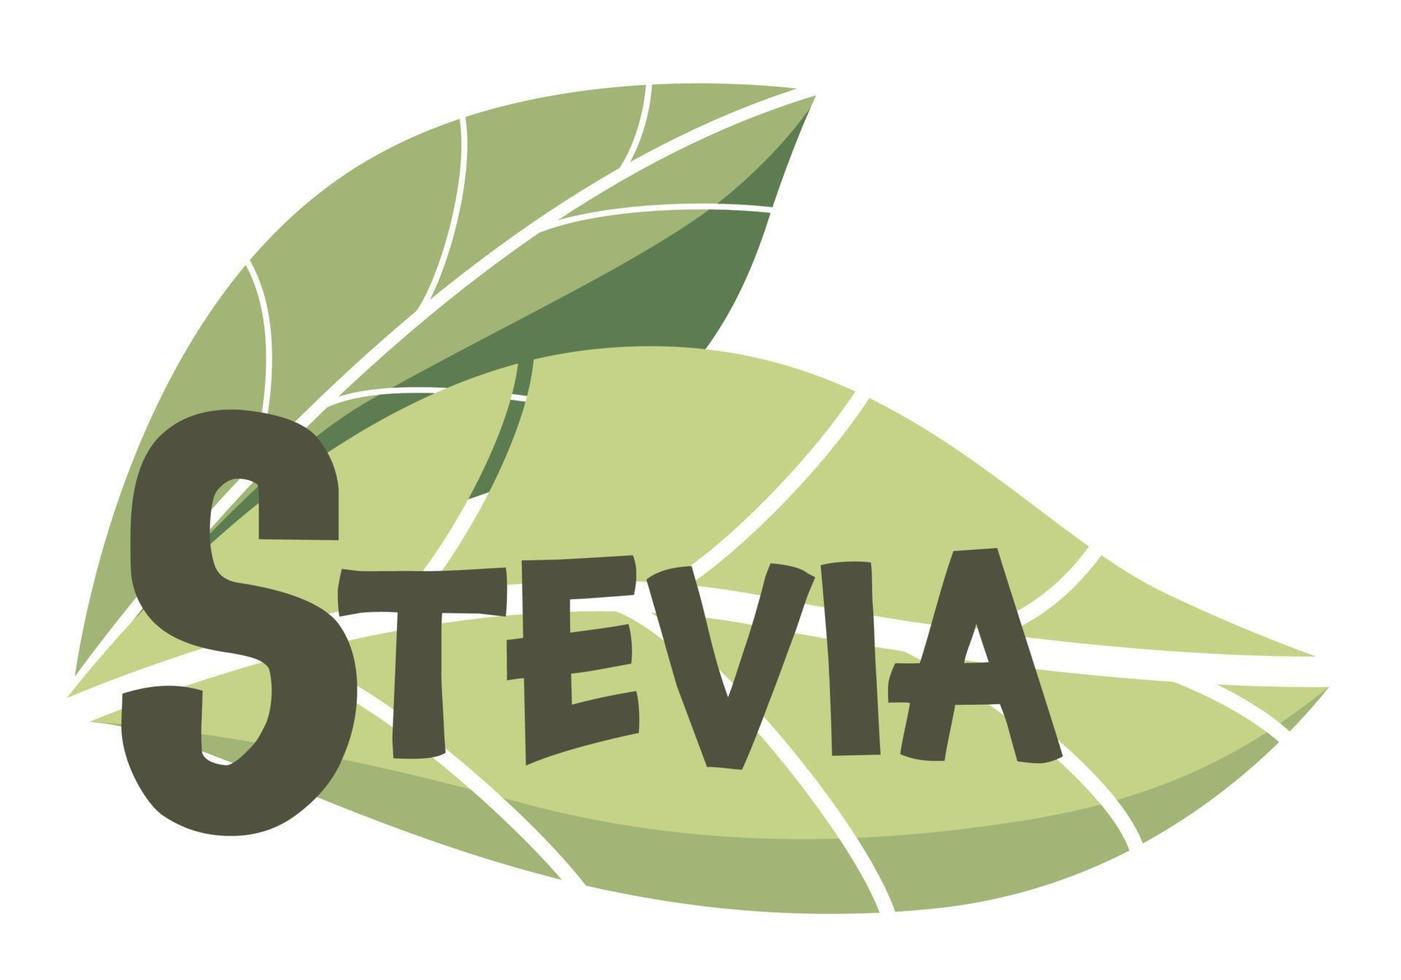 plantilla de logotipo de vector de edulcorante de stevia. hoja verde de azucar